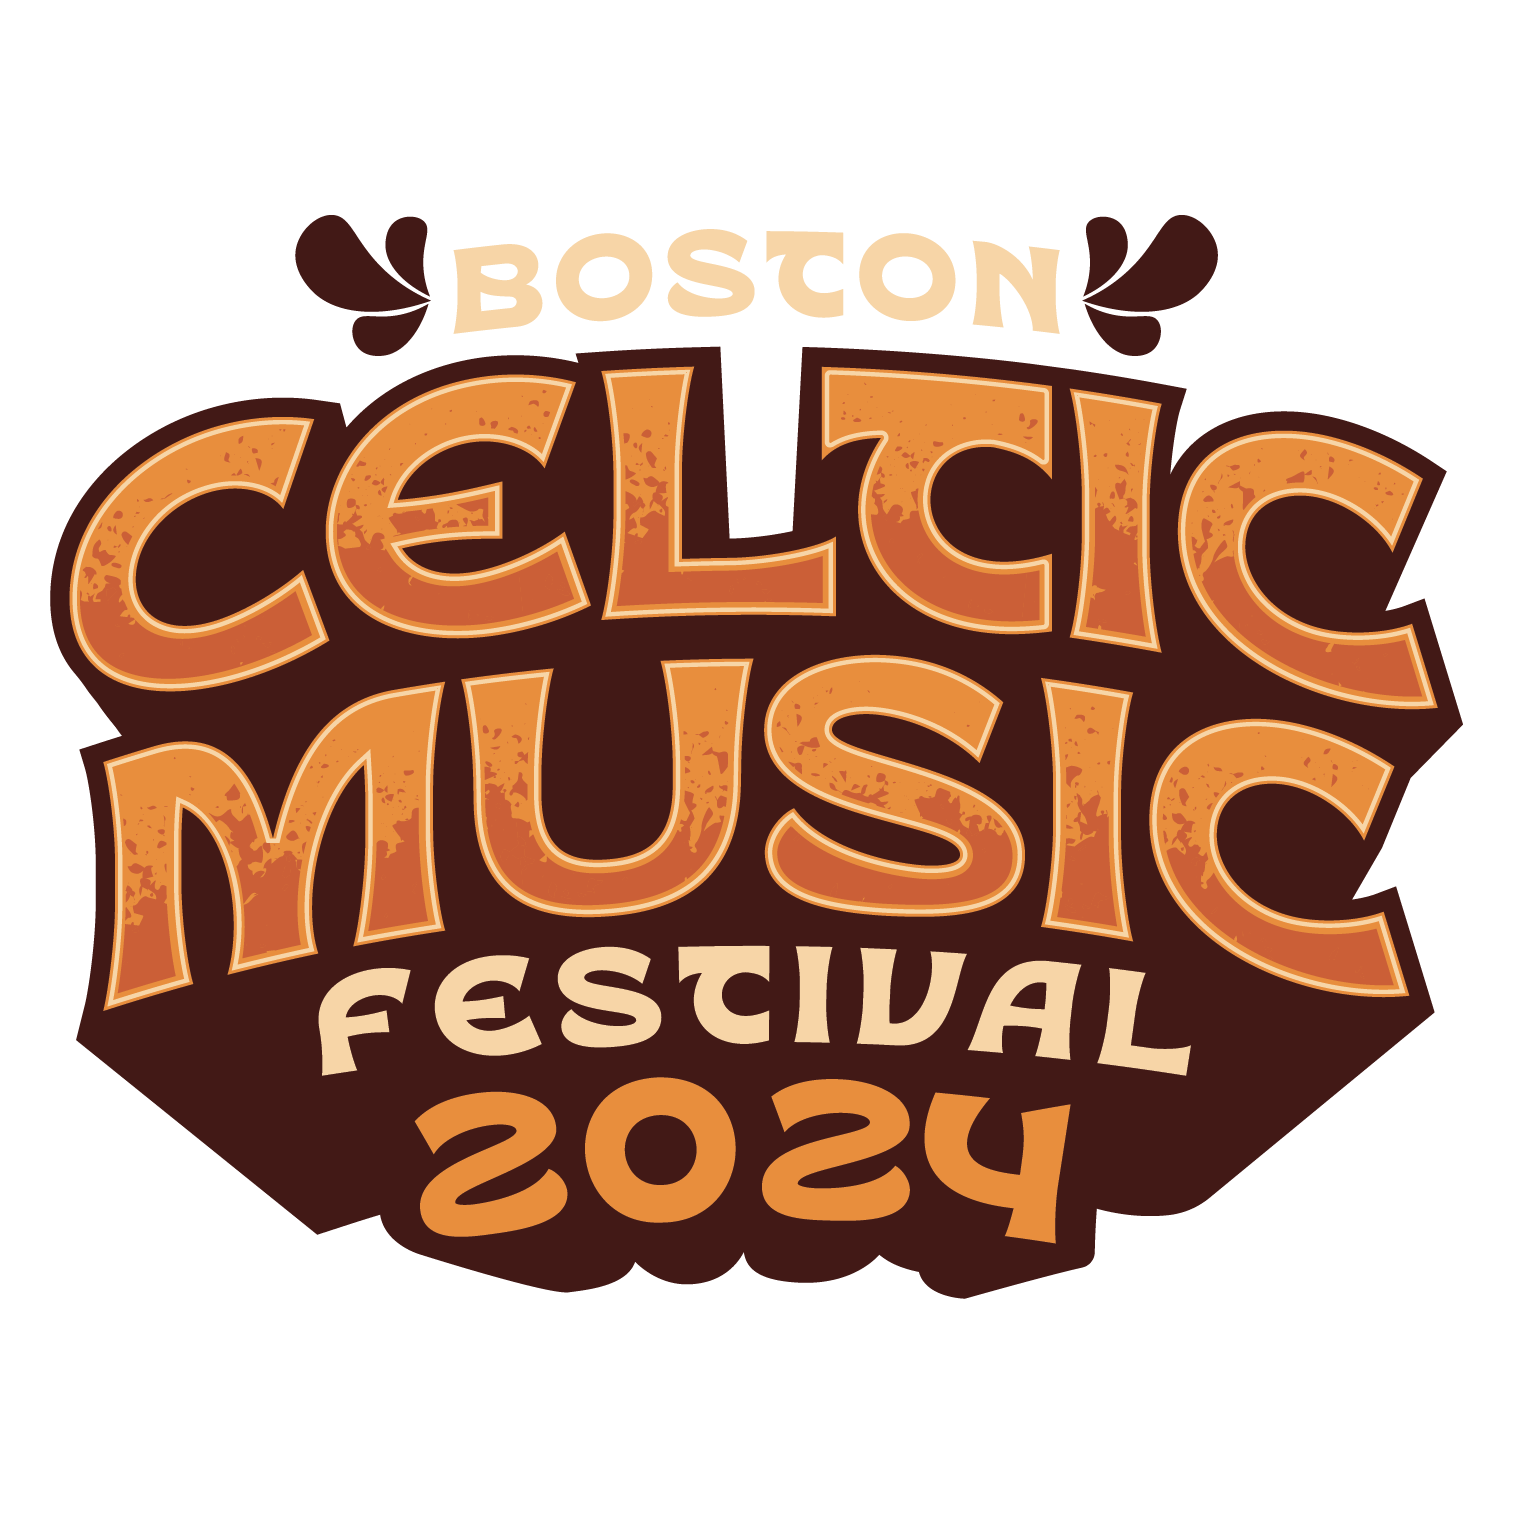 21st Annual Boston Celtic Music Festival Set to Take Place January 11-14